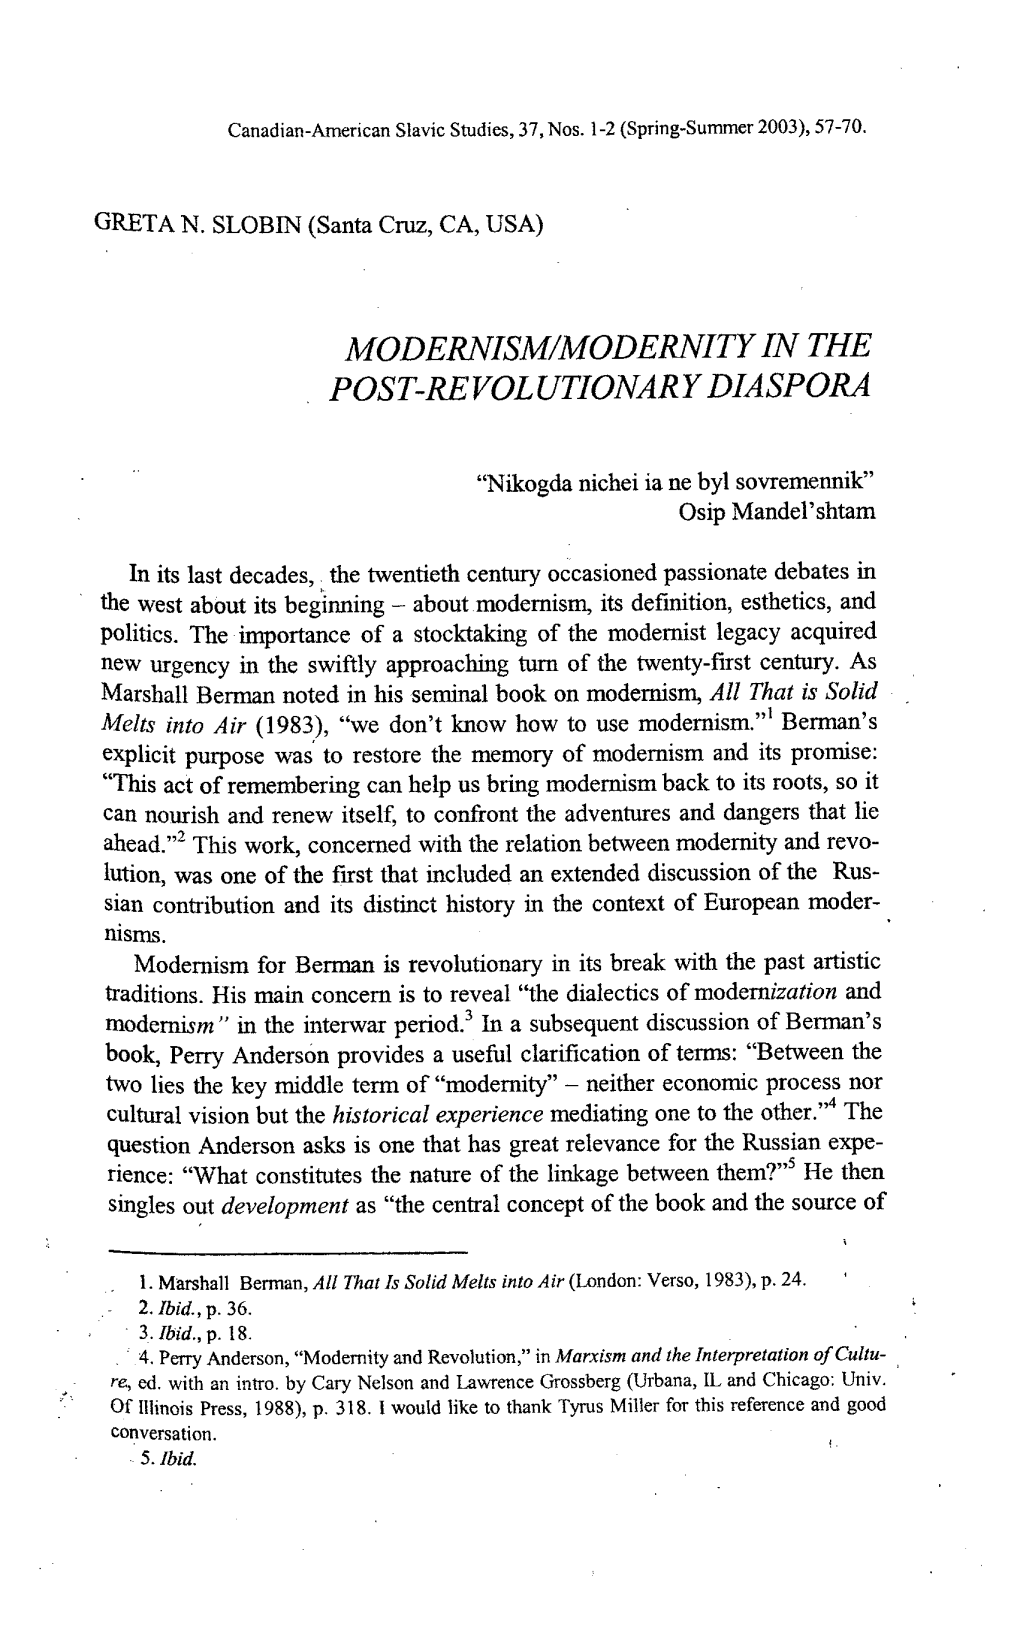 Modernism/Modernity in the Post-Revolutionary Diaspora